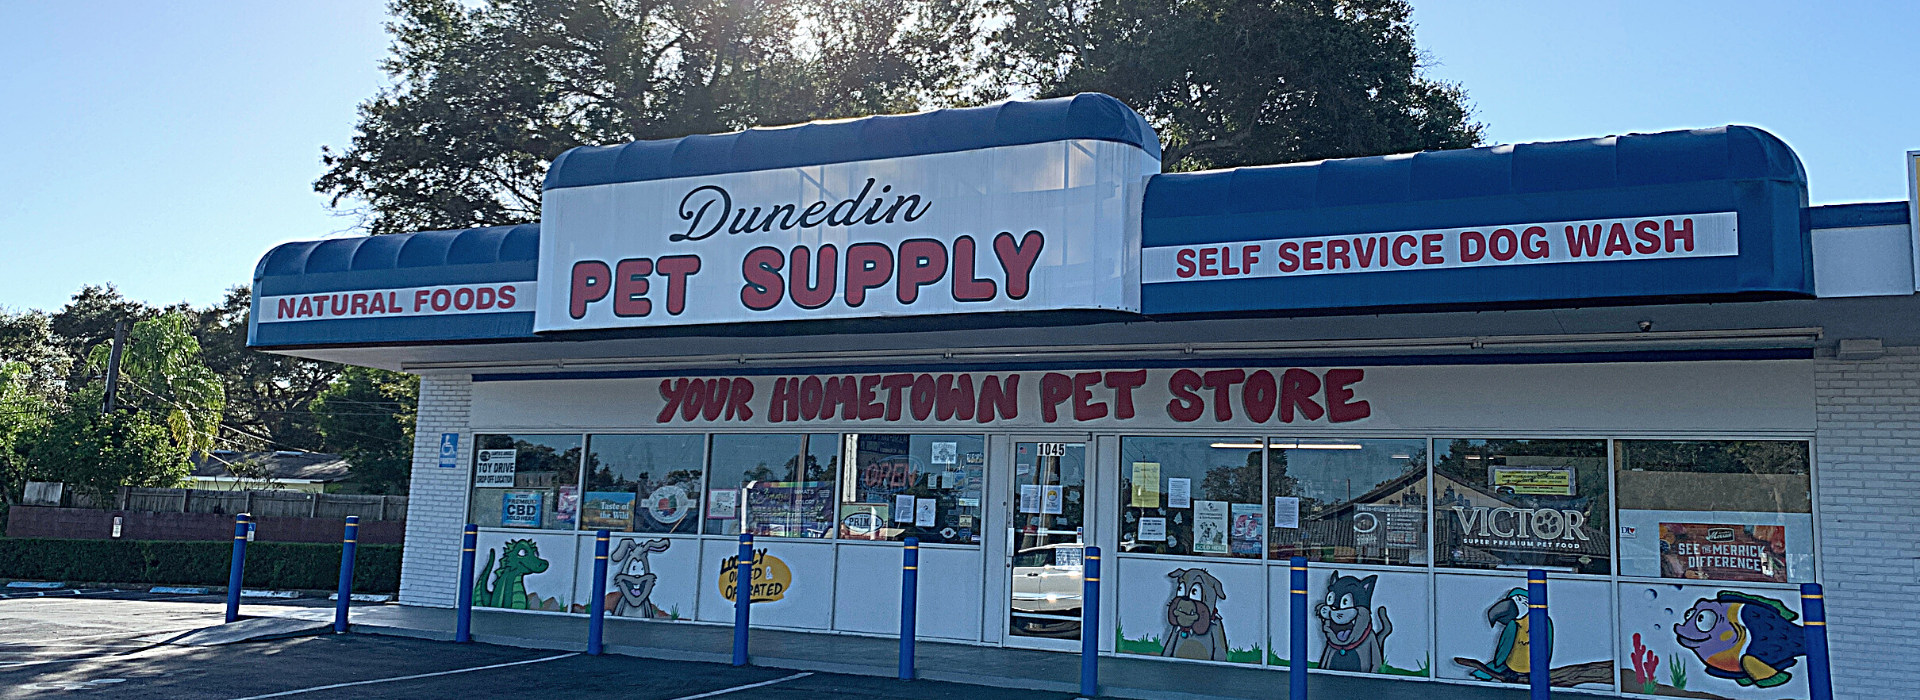 Dunedin Pet Supply & Grooming